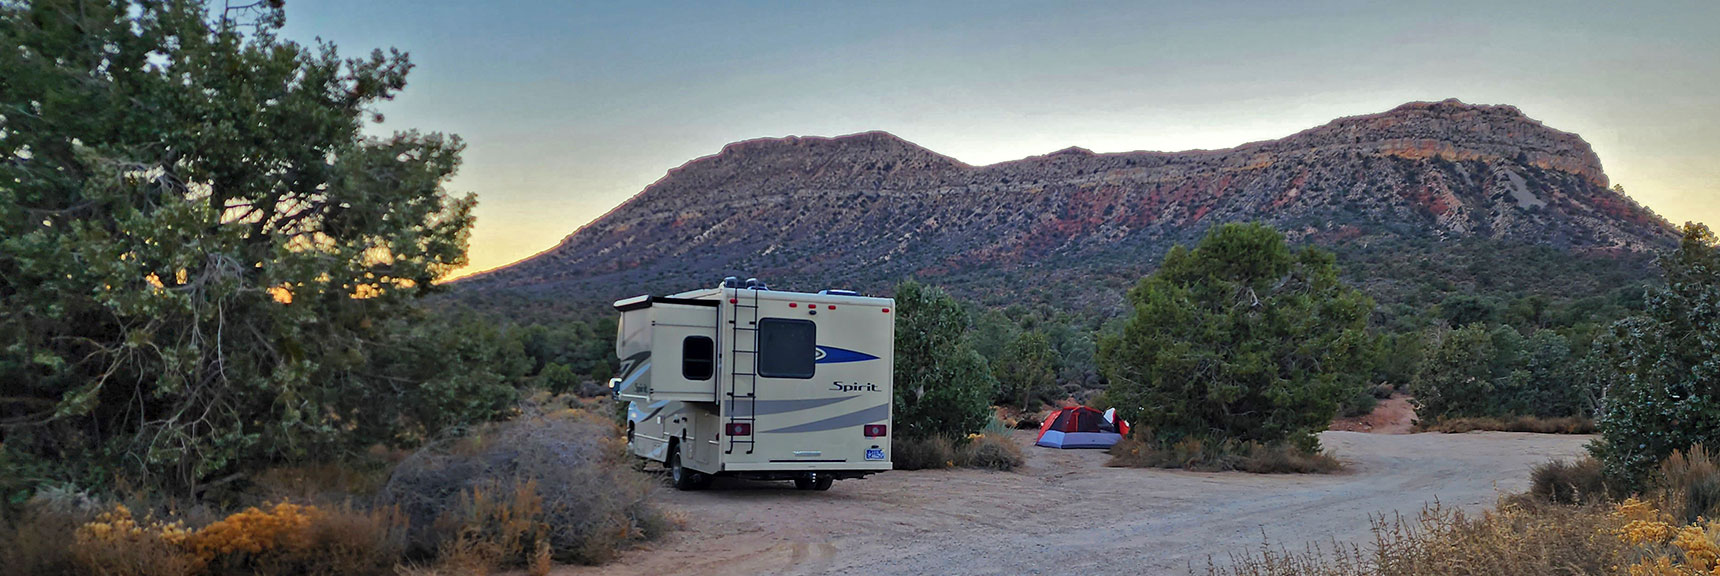 Sunset at the Base of Landmark Bluff | Lovell Canyon Camping, Nevada | David Smith | LasVegasAreaTrails.com